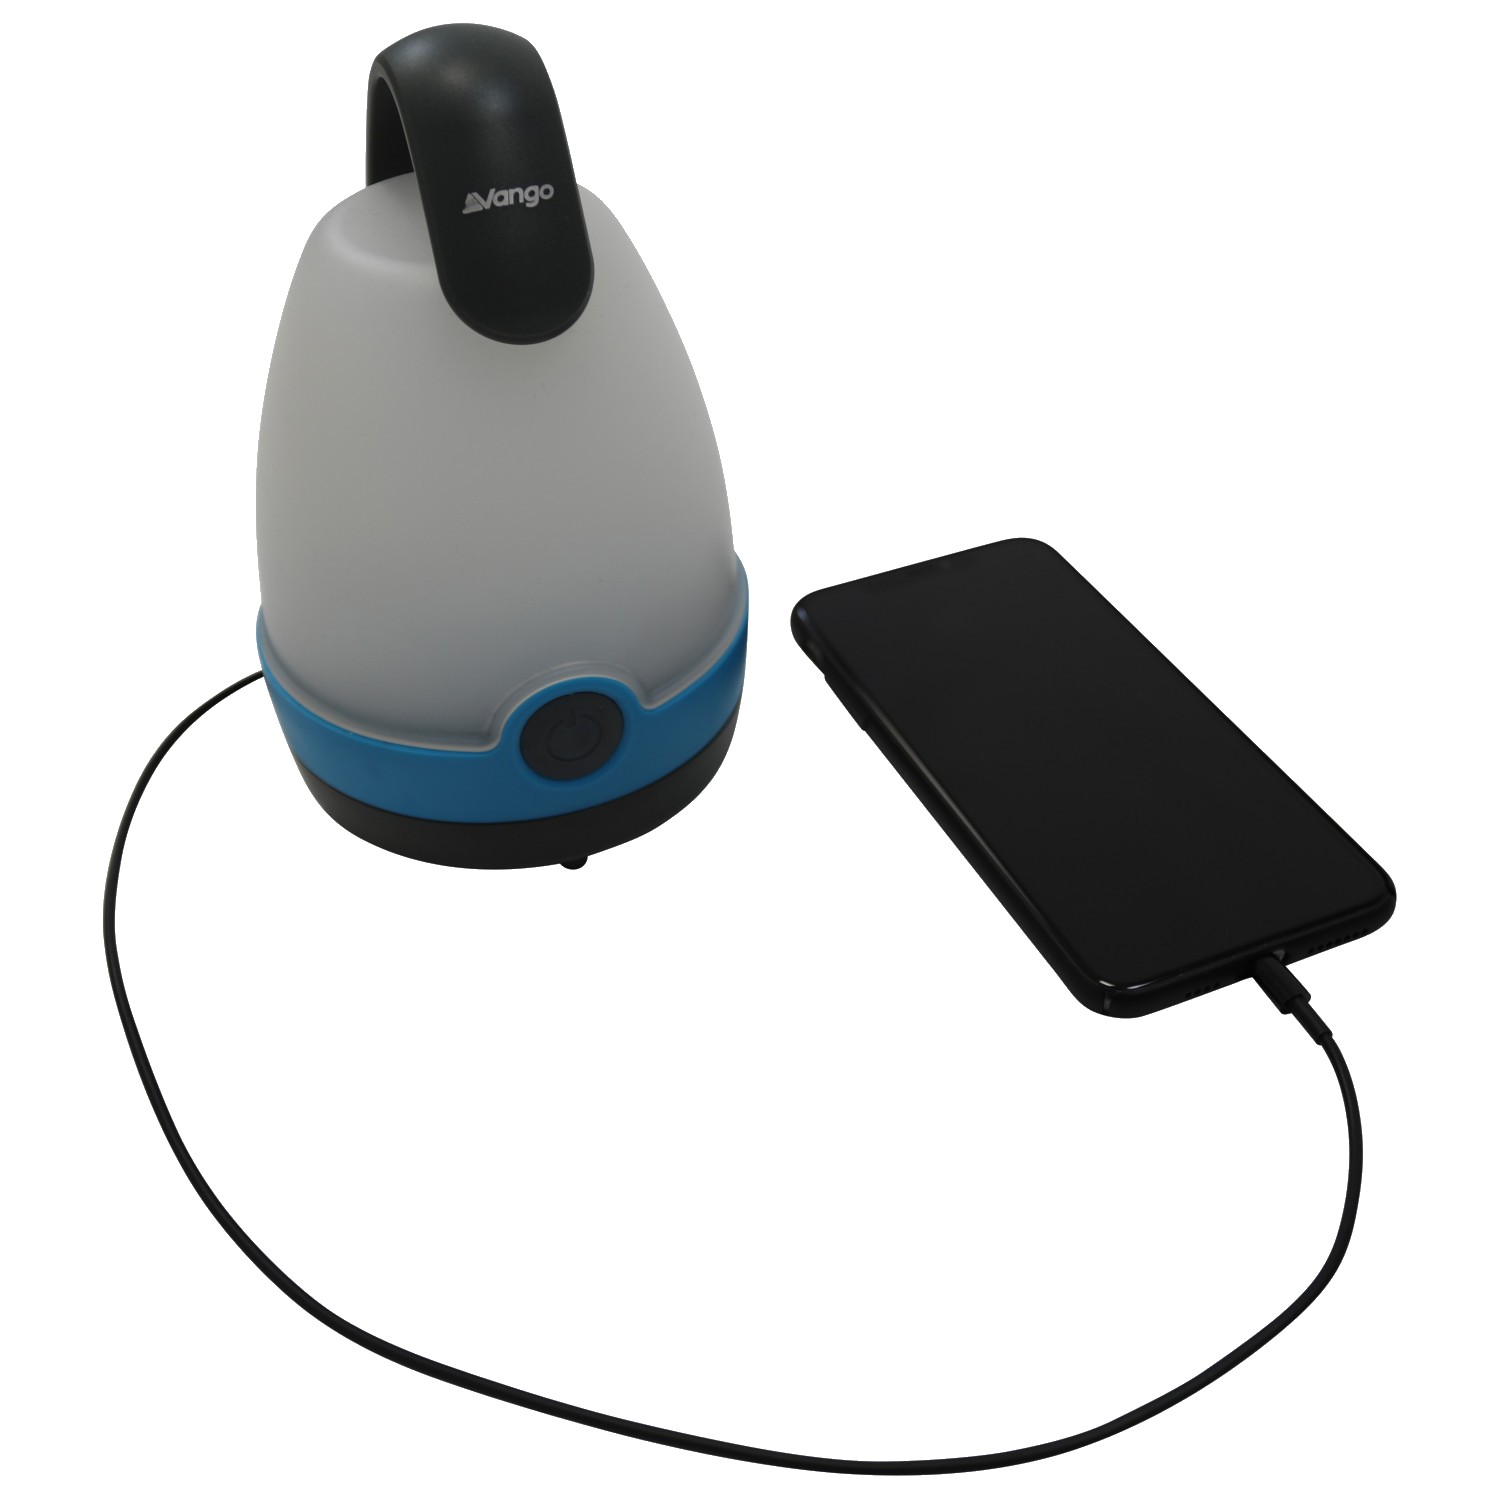 Vango Superstar 500 Rechargeable USB Camping Lantern